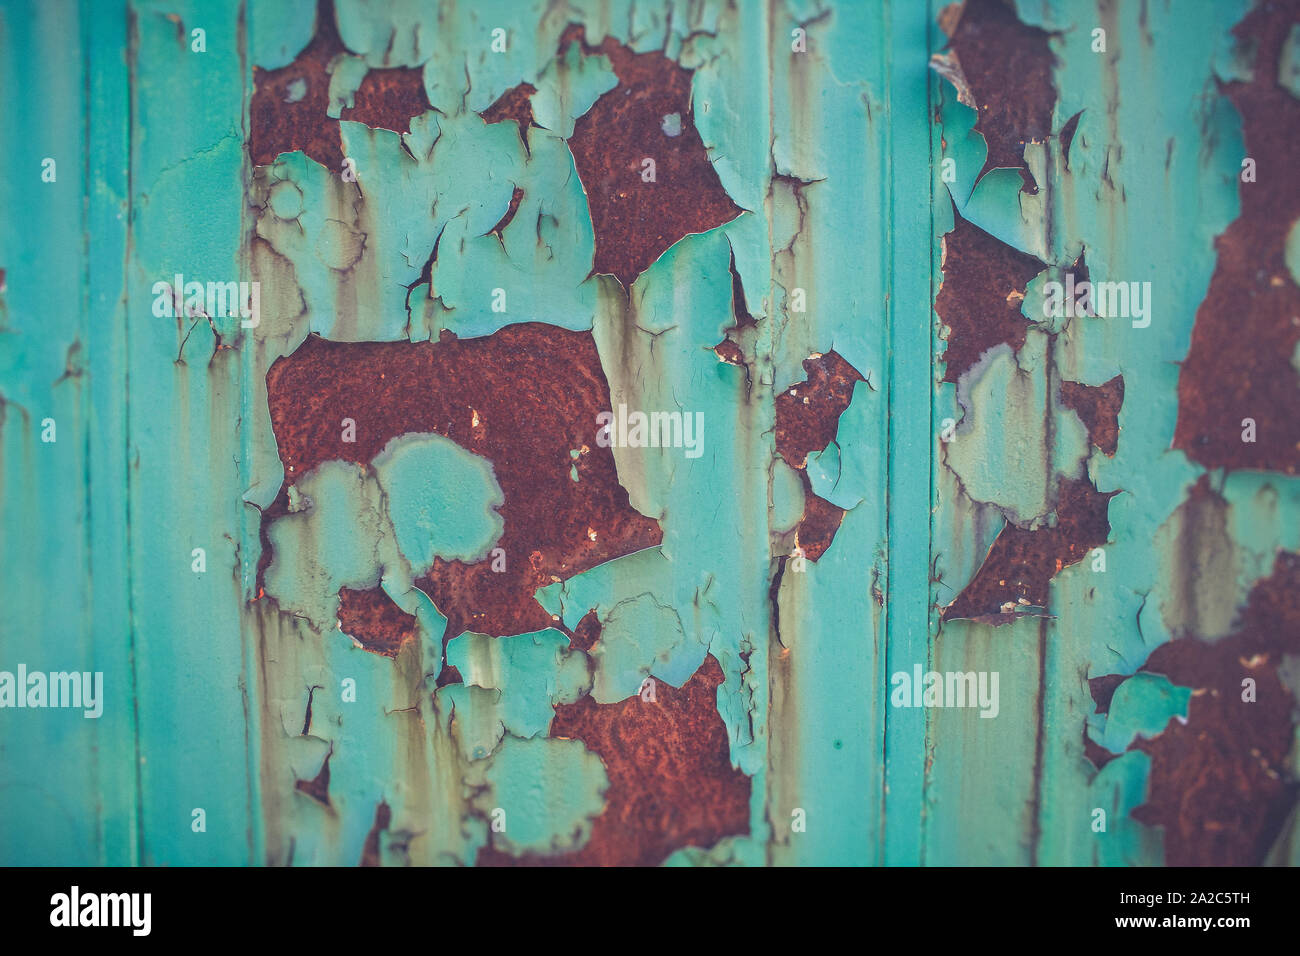 damaged and rusty metallic background Stock Photo